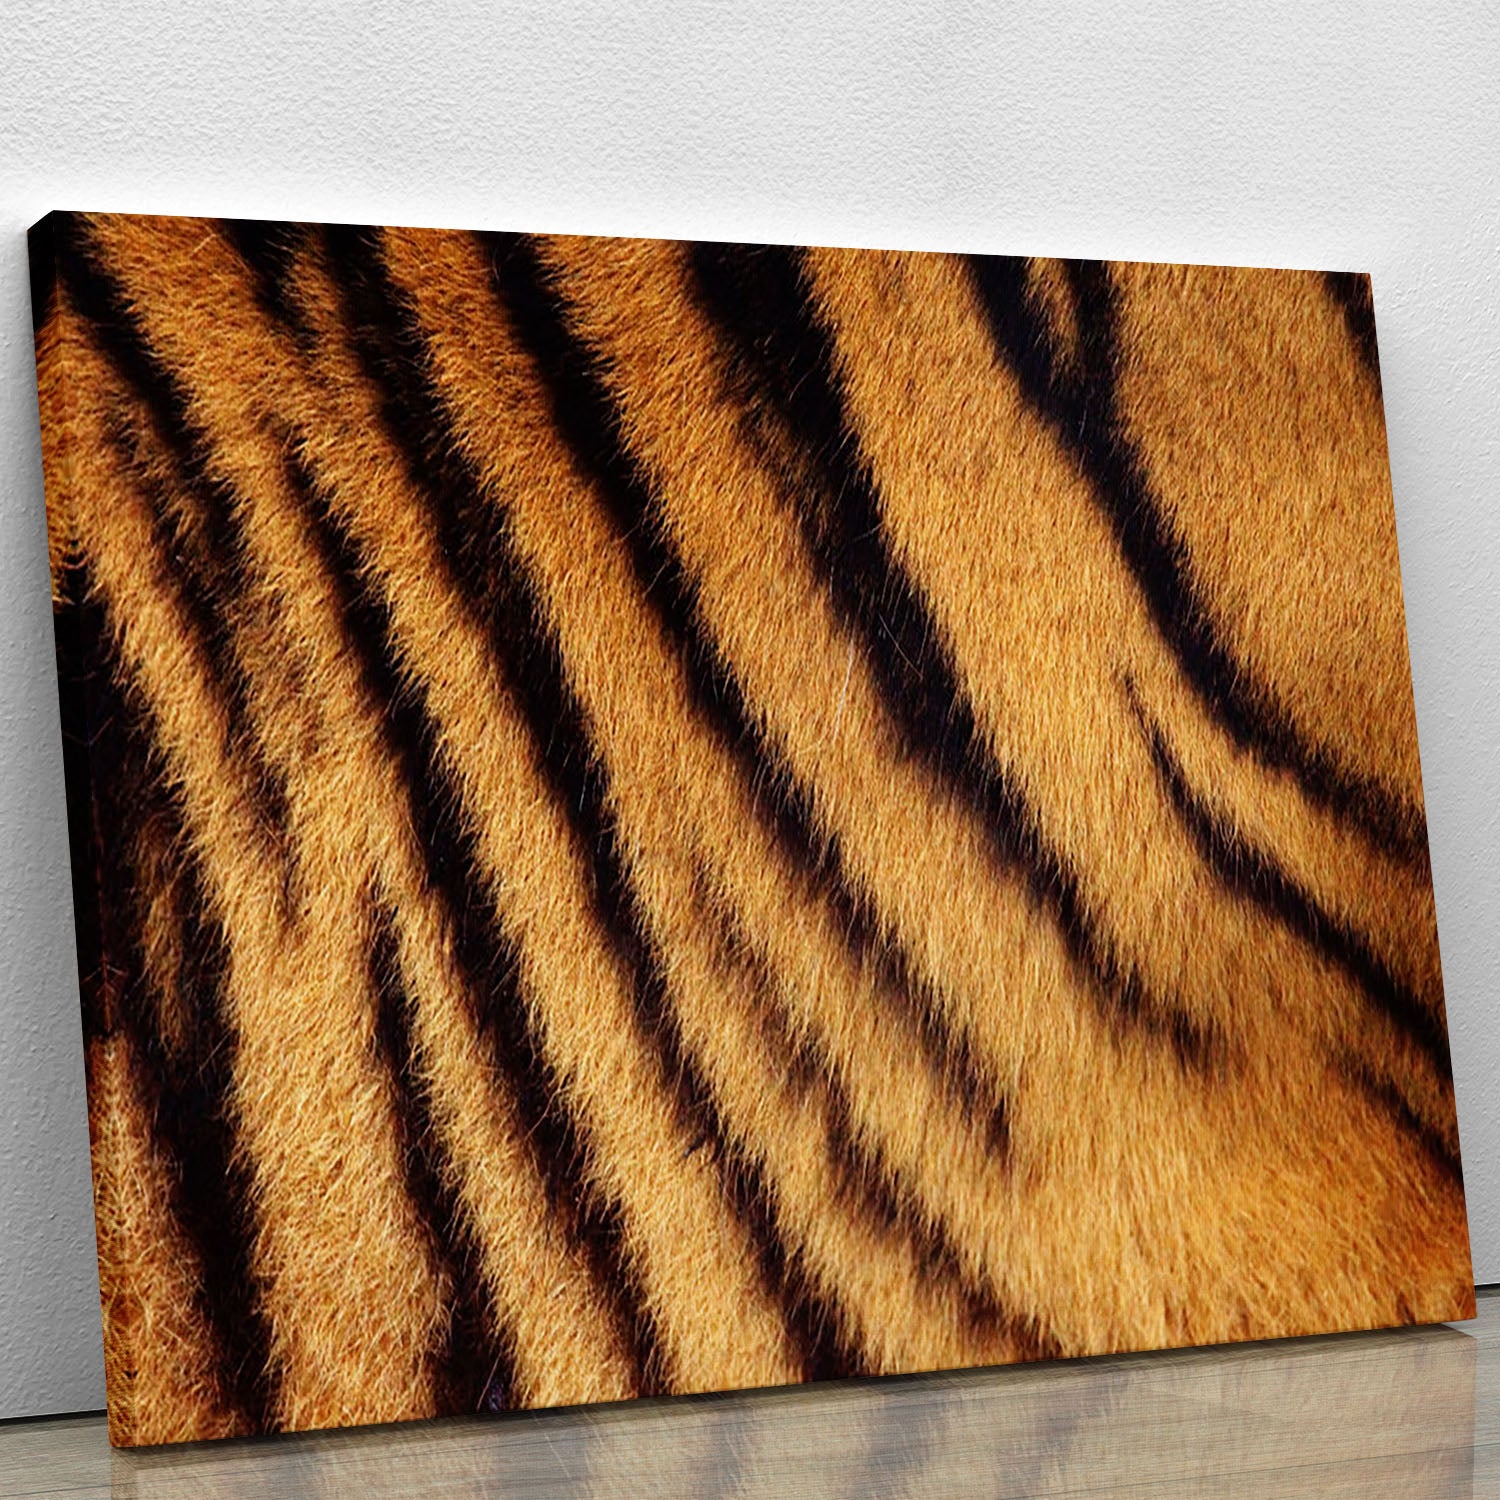 Siberian or Amur tiger stripped fur Canvas Print or Poster - Canvas Art Rocks - 1